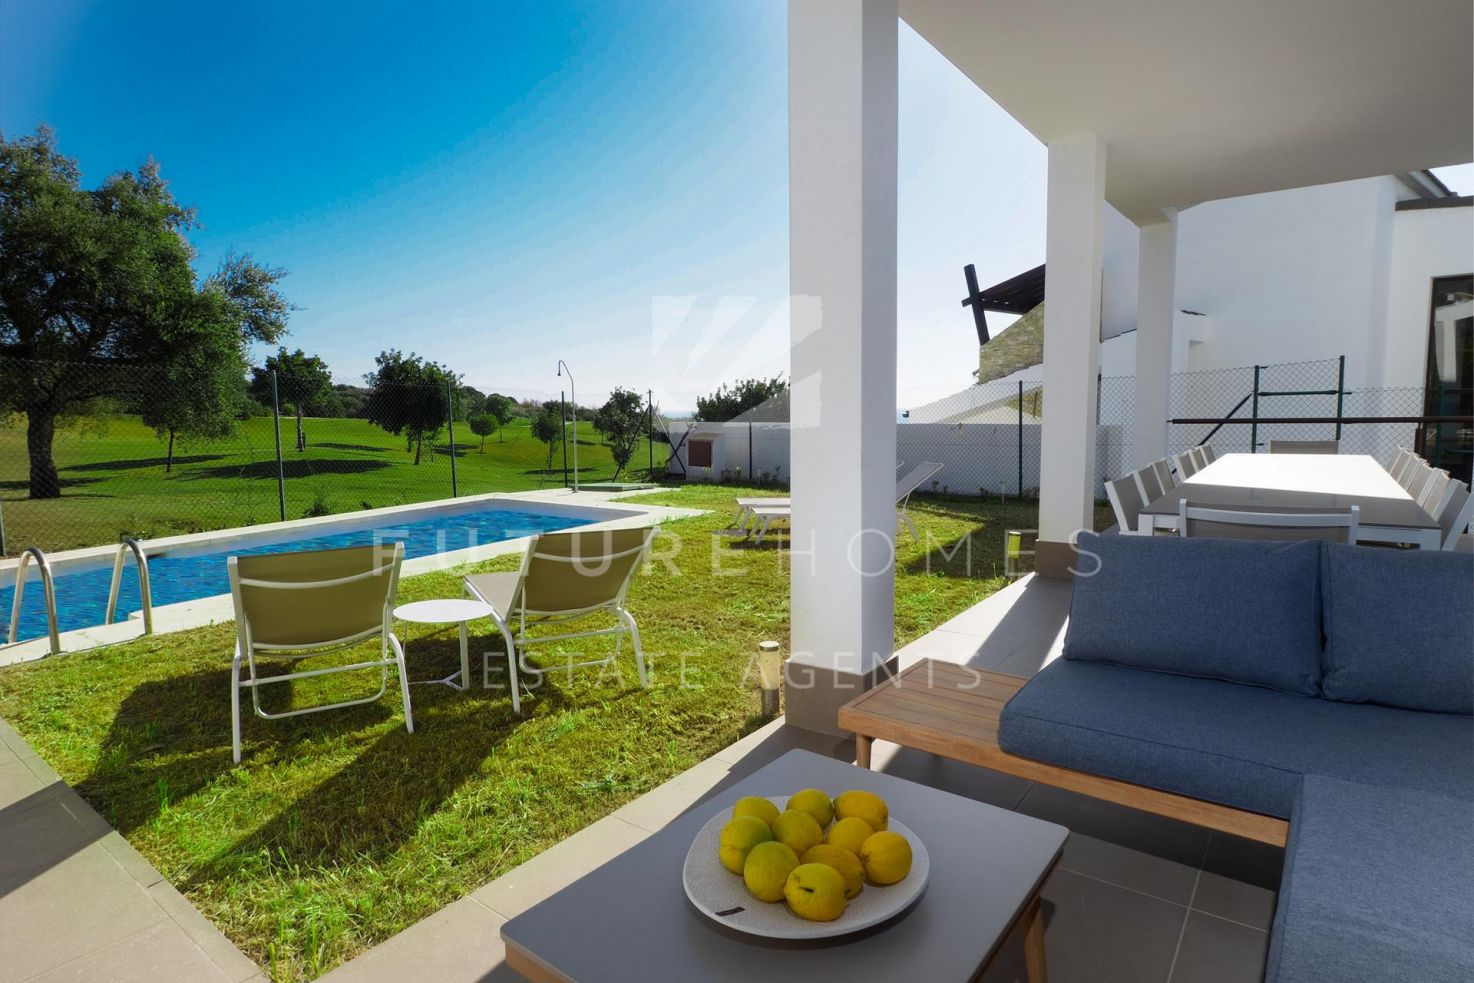 Frontline golf, semi-detached villa for sale in Estepona in immaculate condition! 